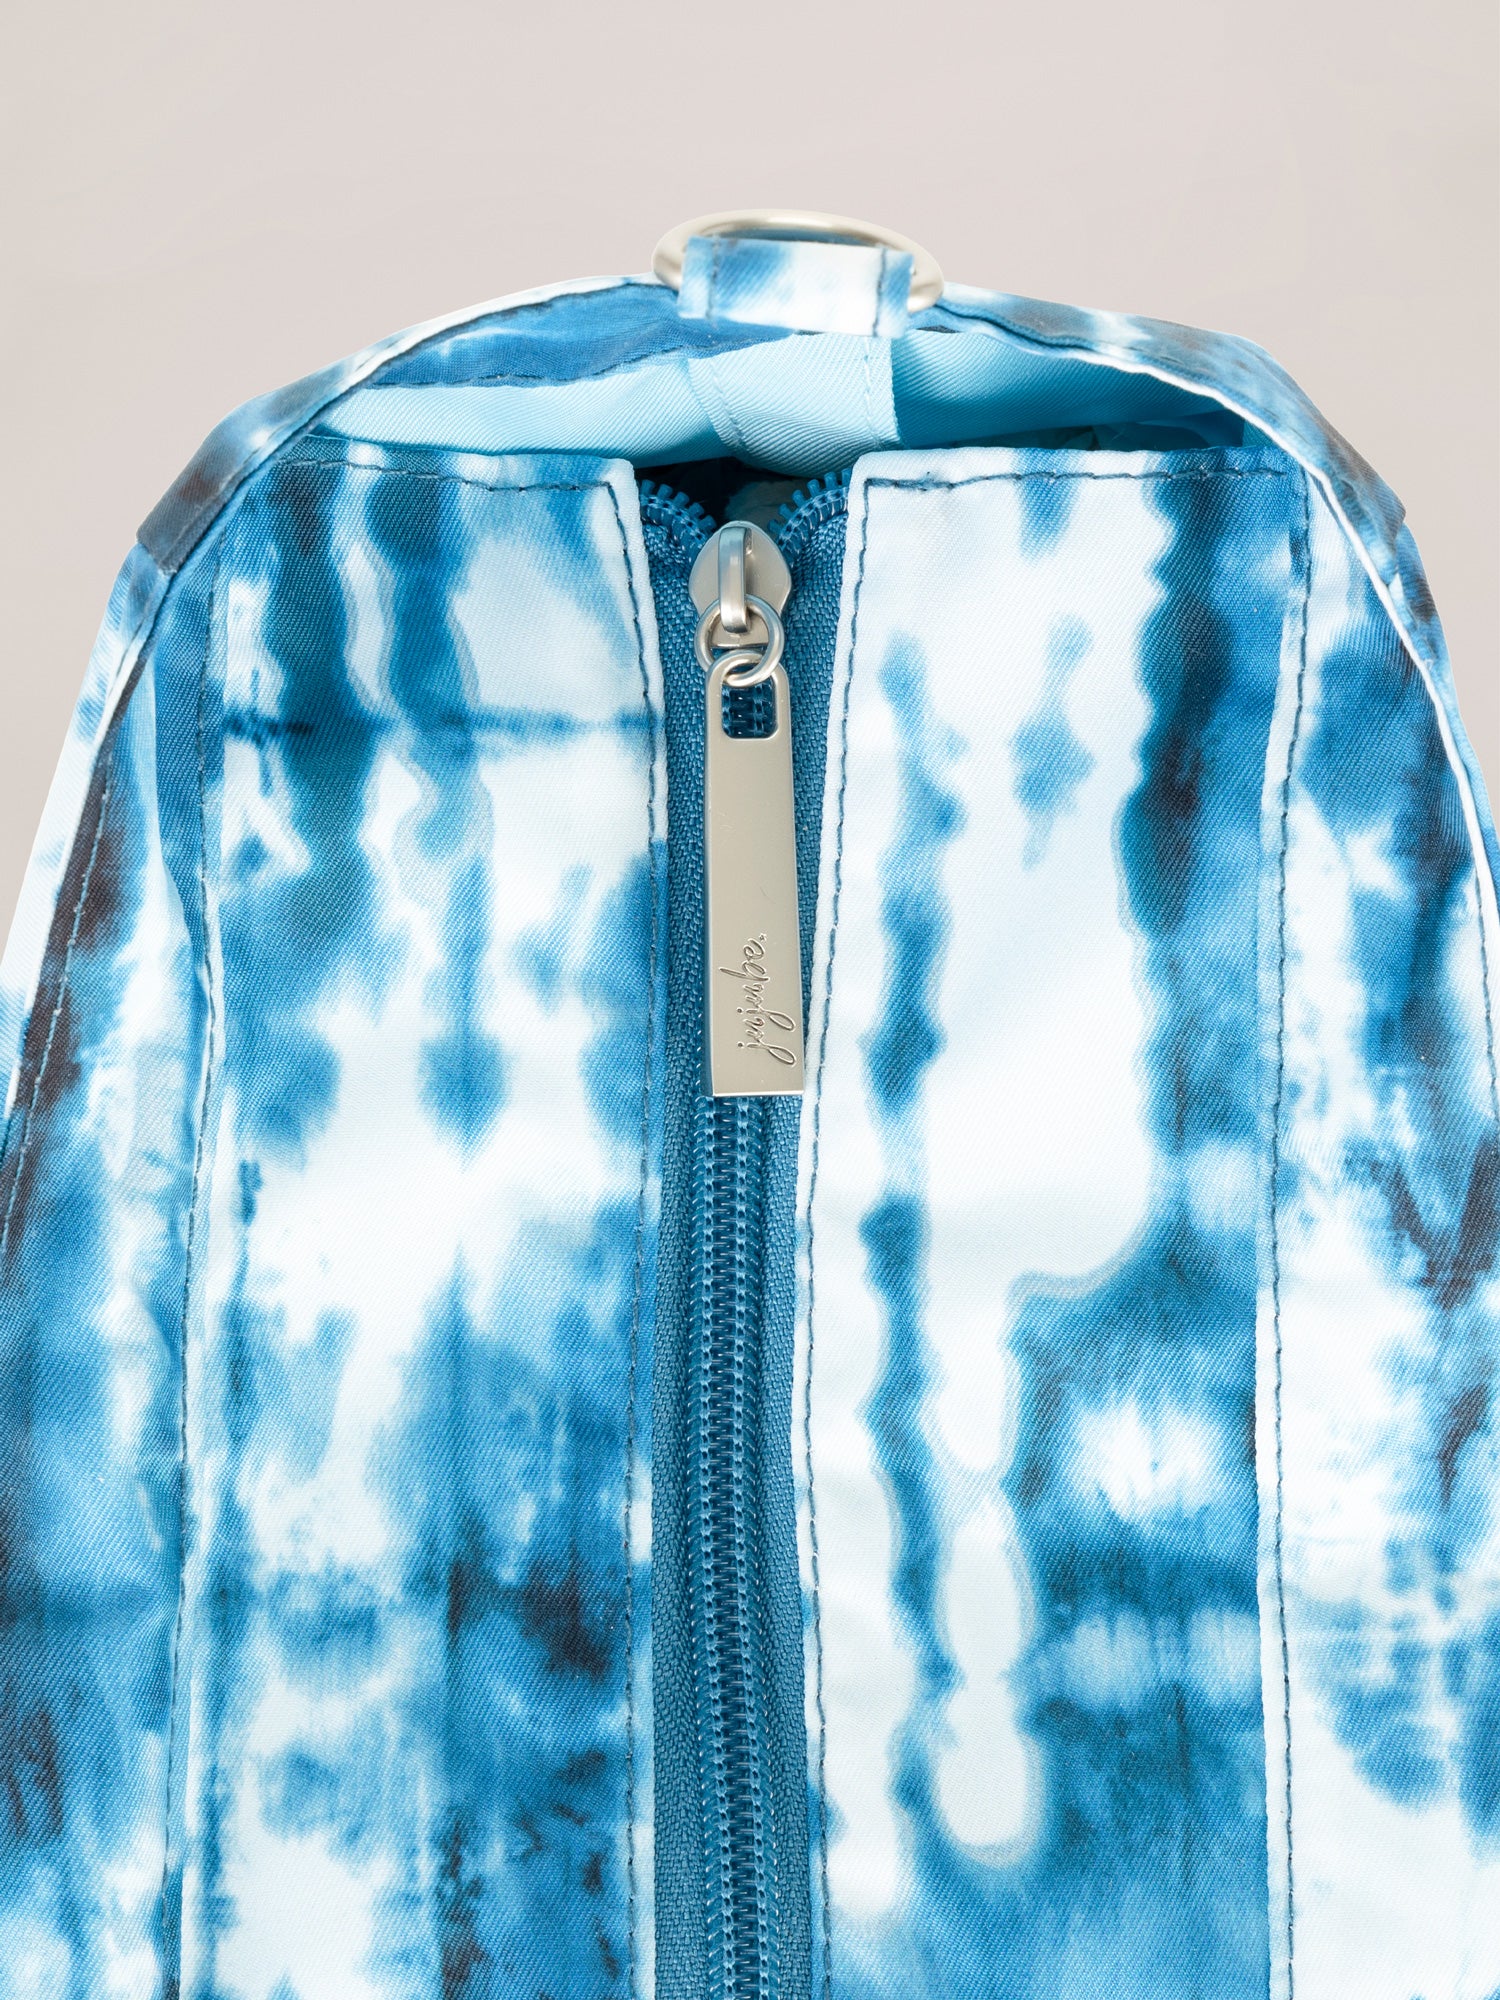 Blue and White Tie Dye Print Super Be Tote Bag Zipper Detail View